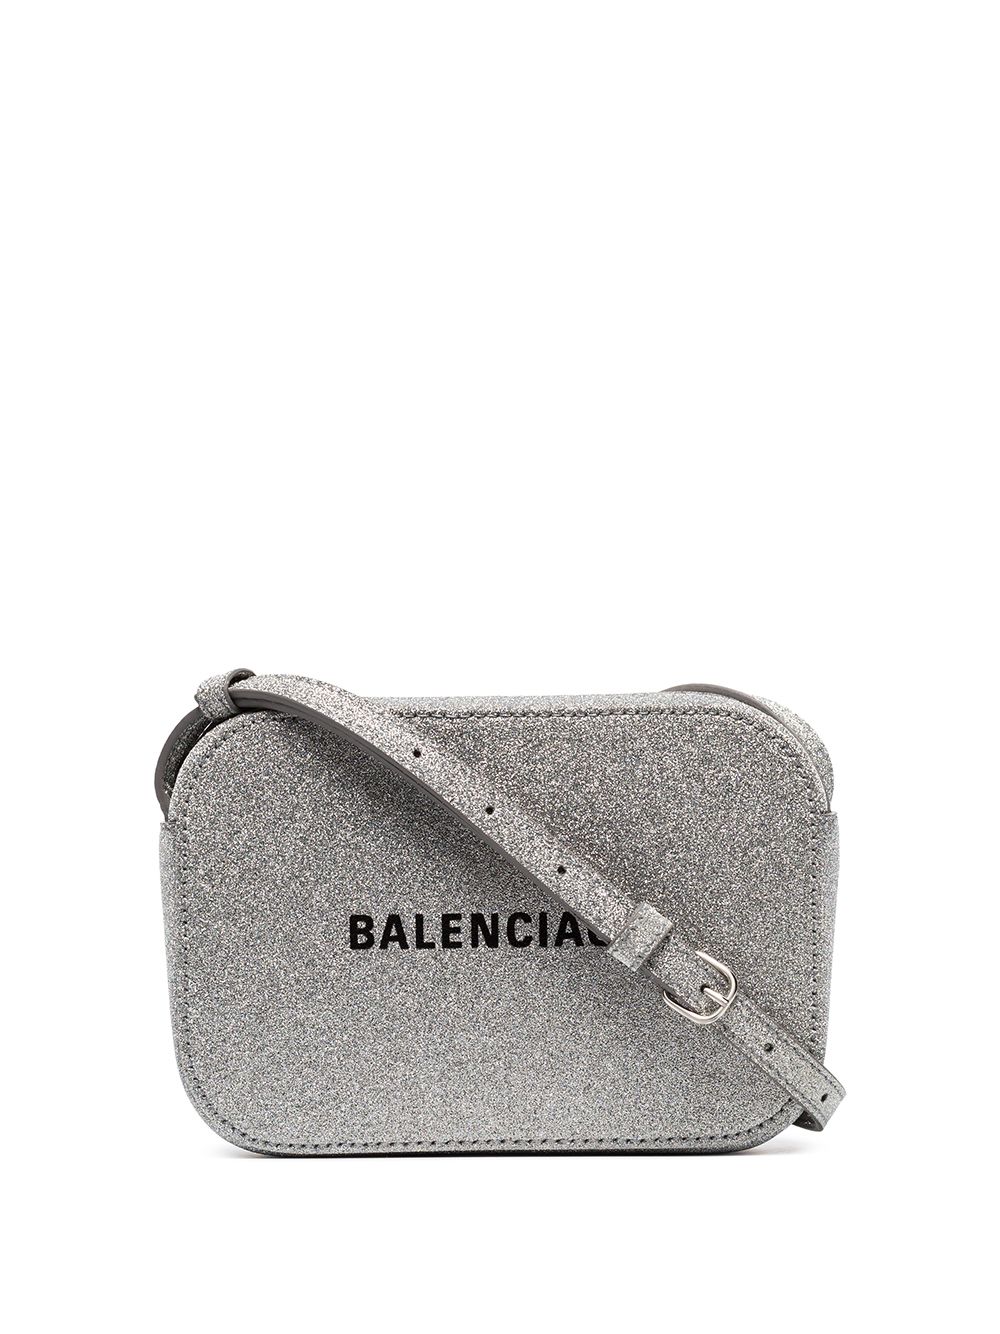 фото Balenciaga каркасная сумка everyday